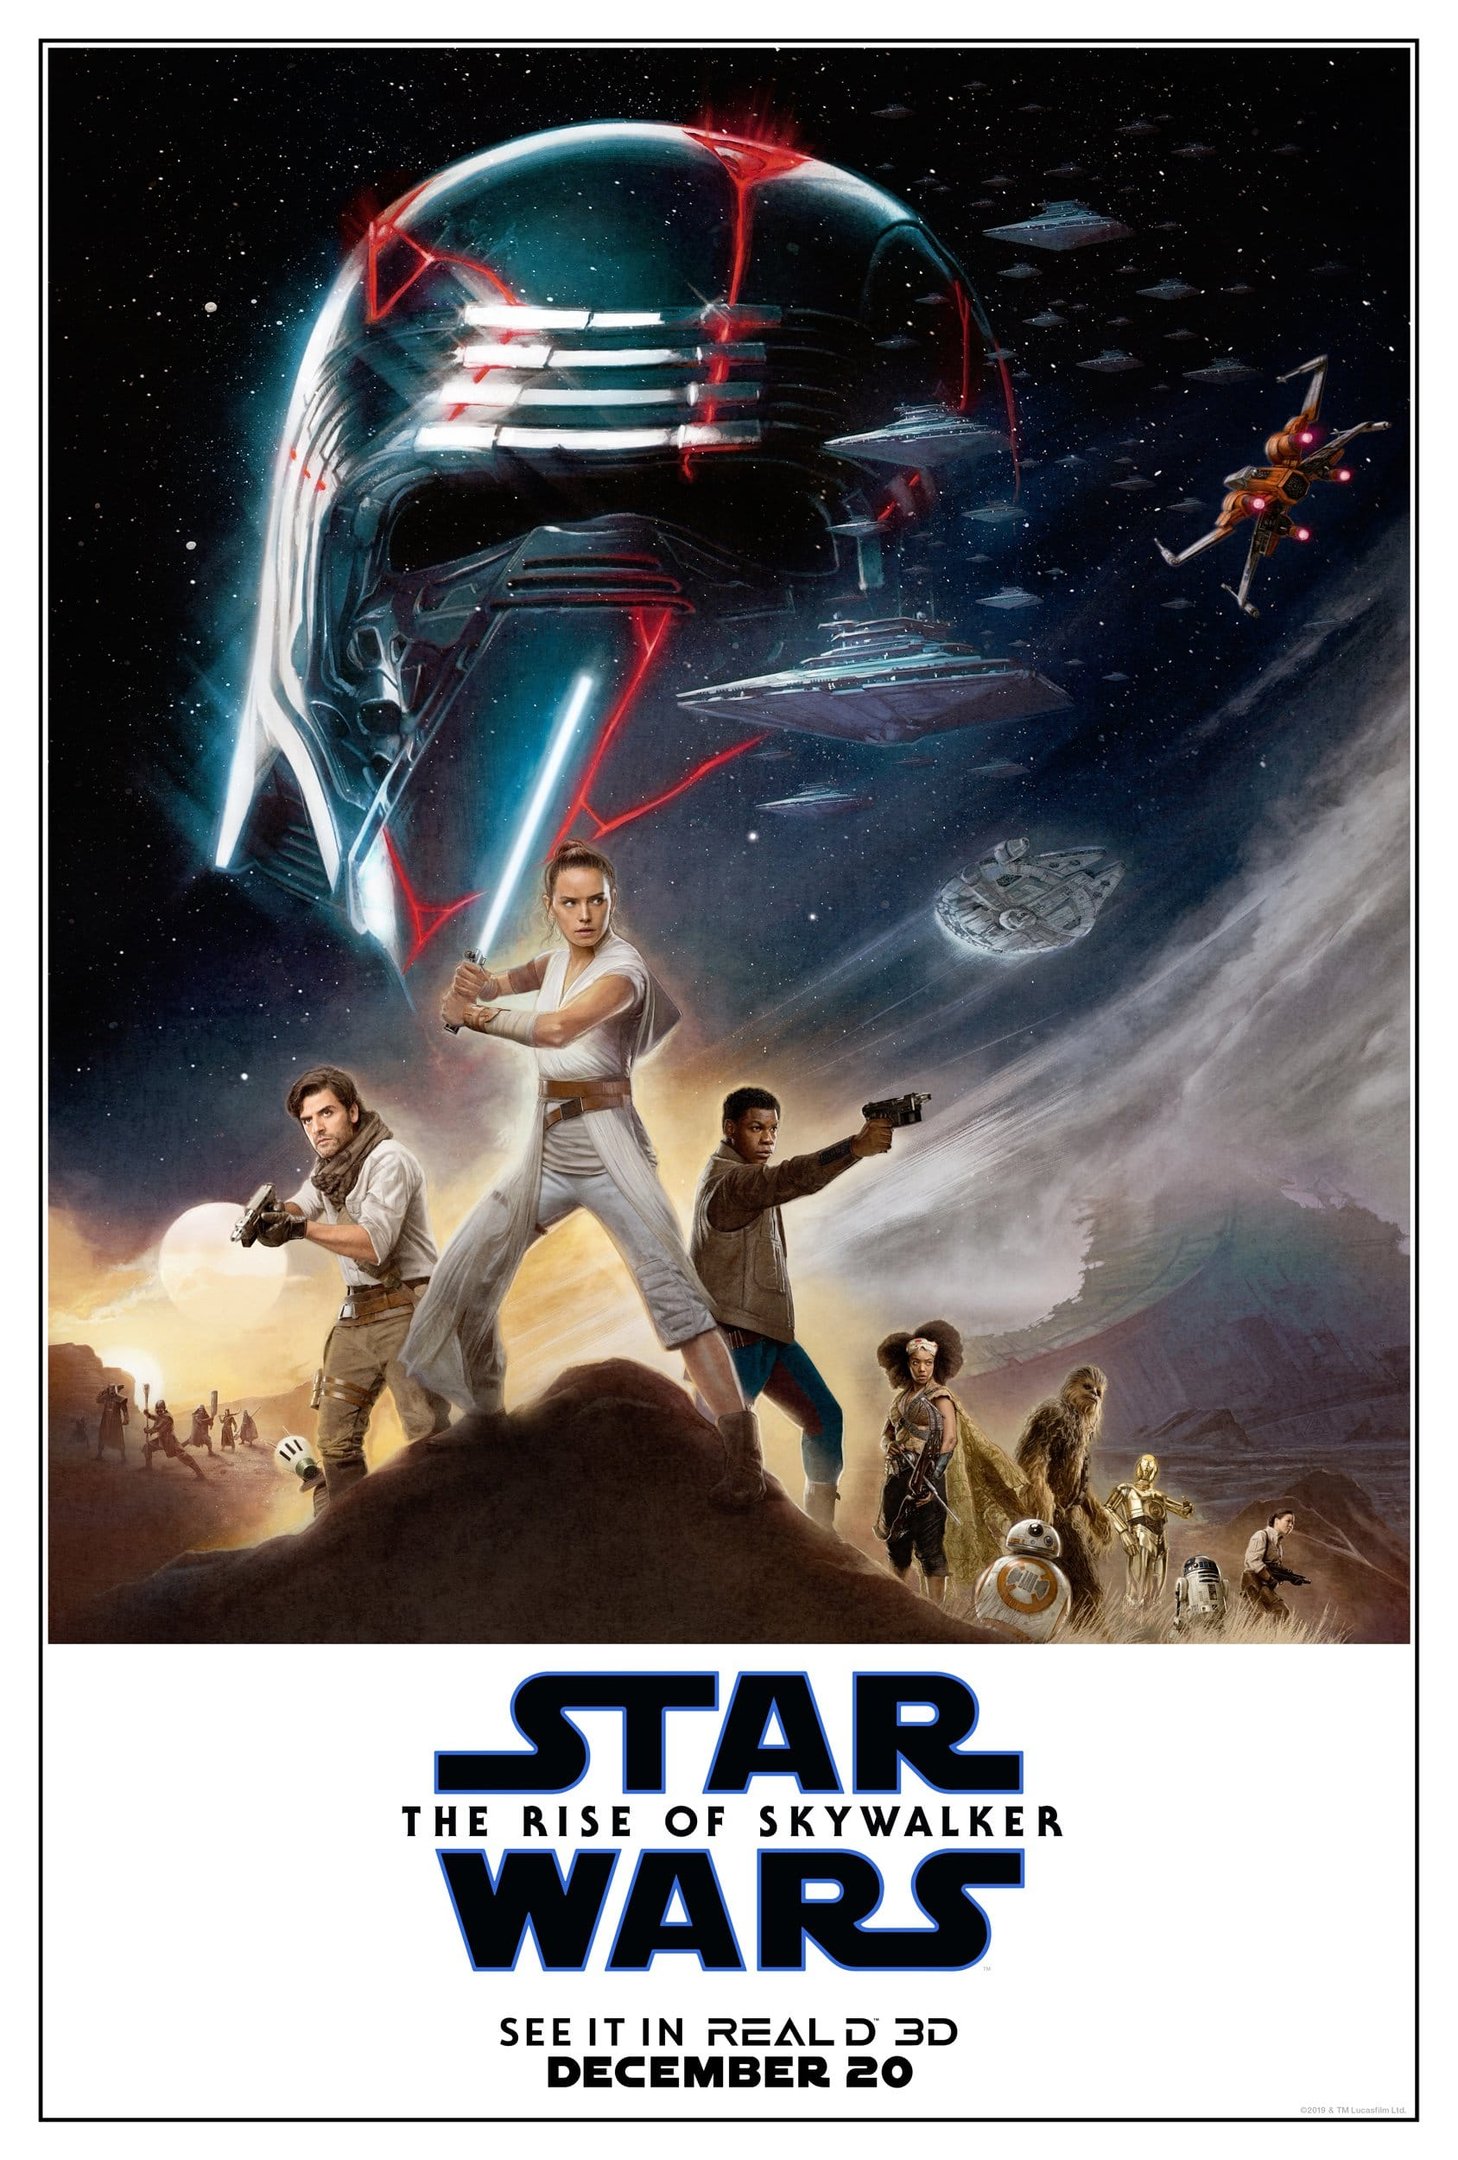 Star Wars: A Ascensão Skywalker  Nova foto mostra personagem de